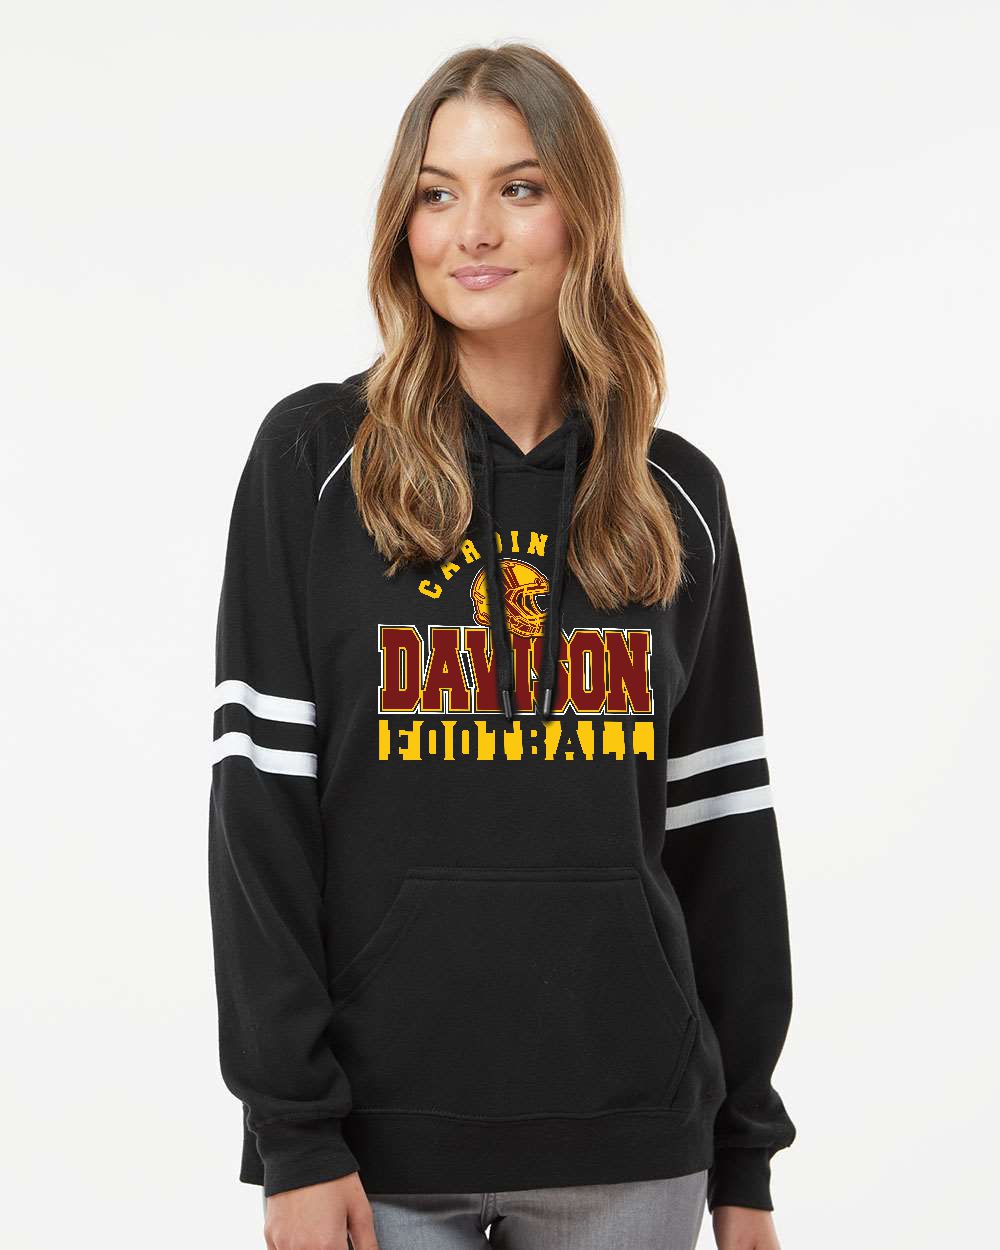 Davison Football Women's Varsity Fleece Piped Hooded Sweatshirt